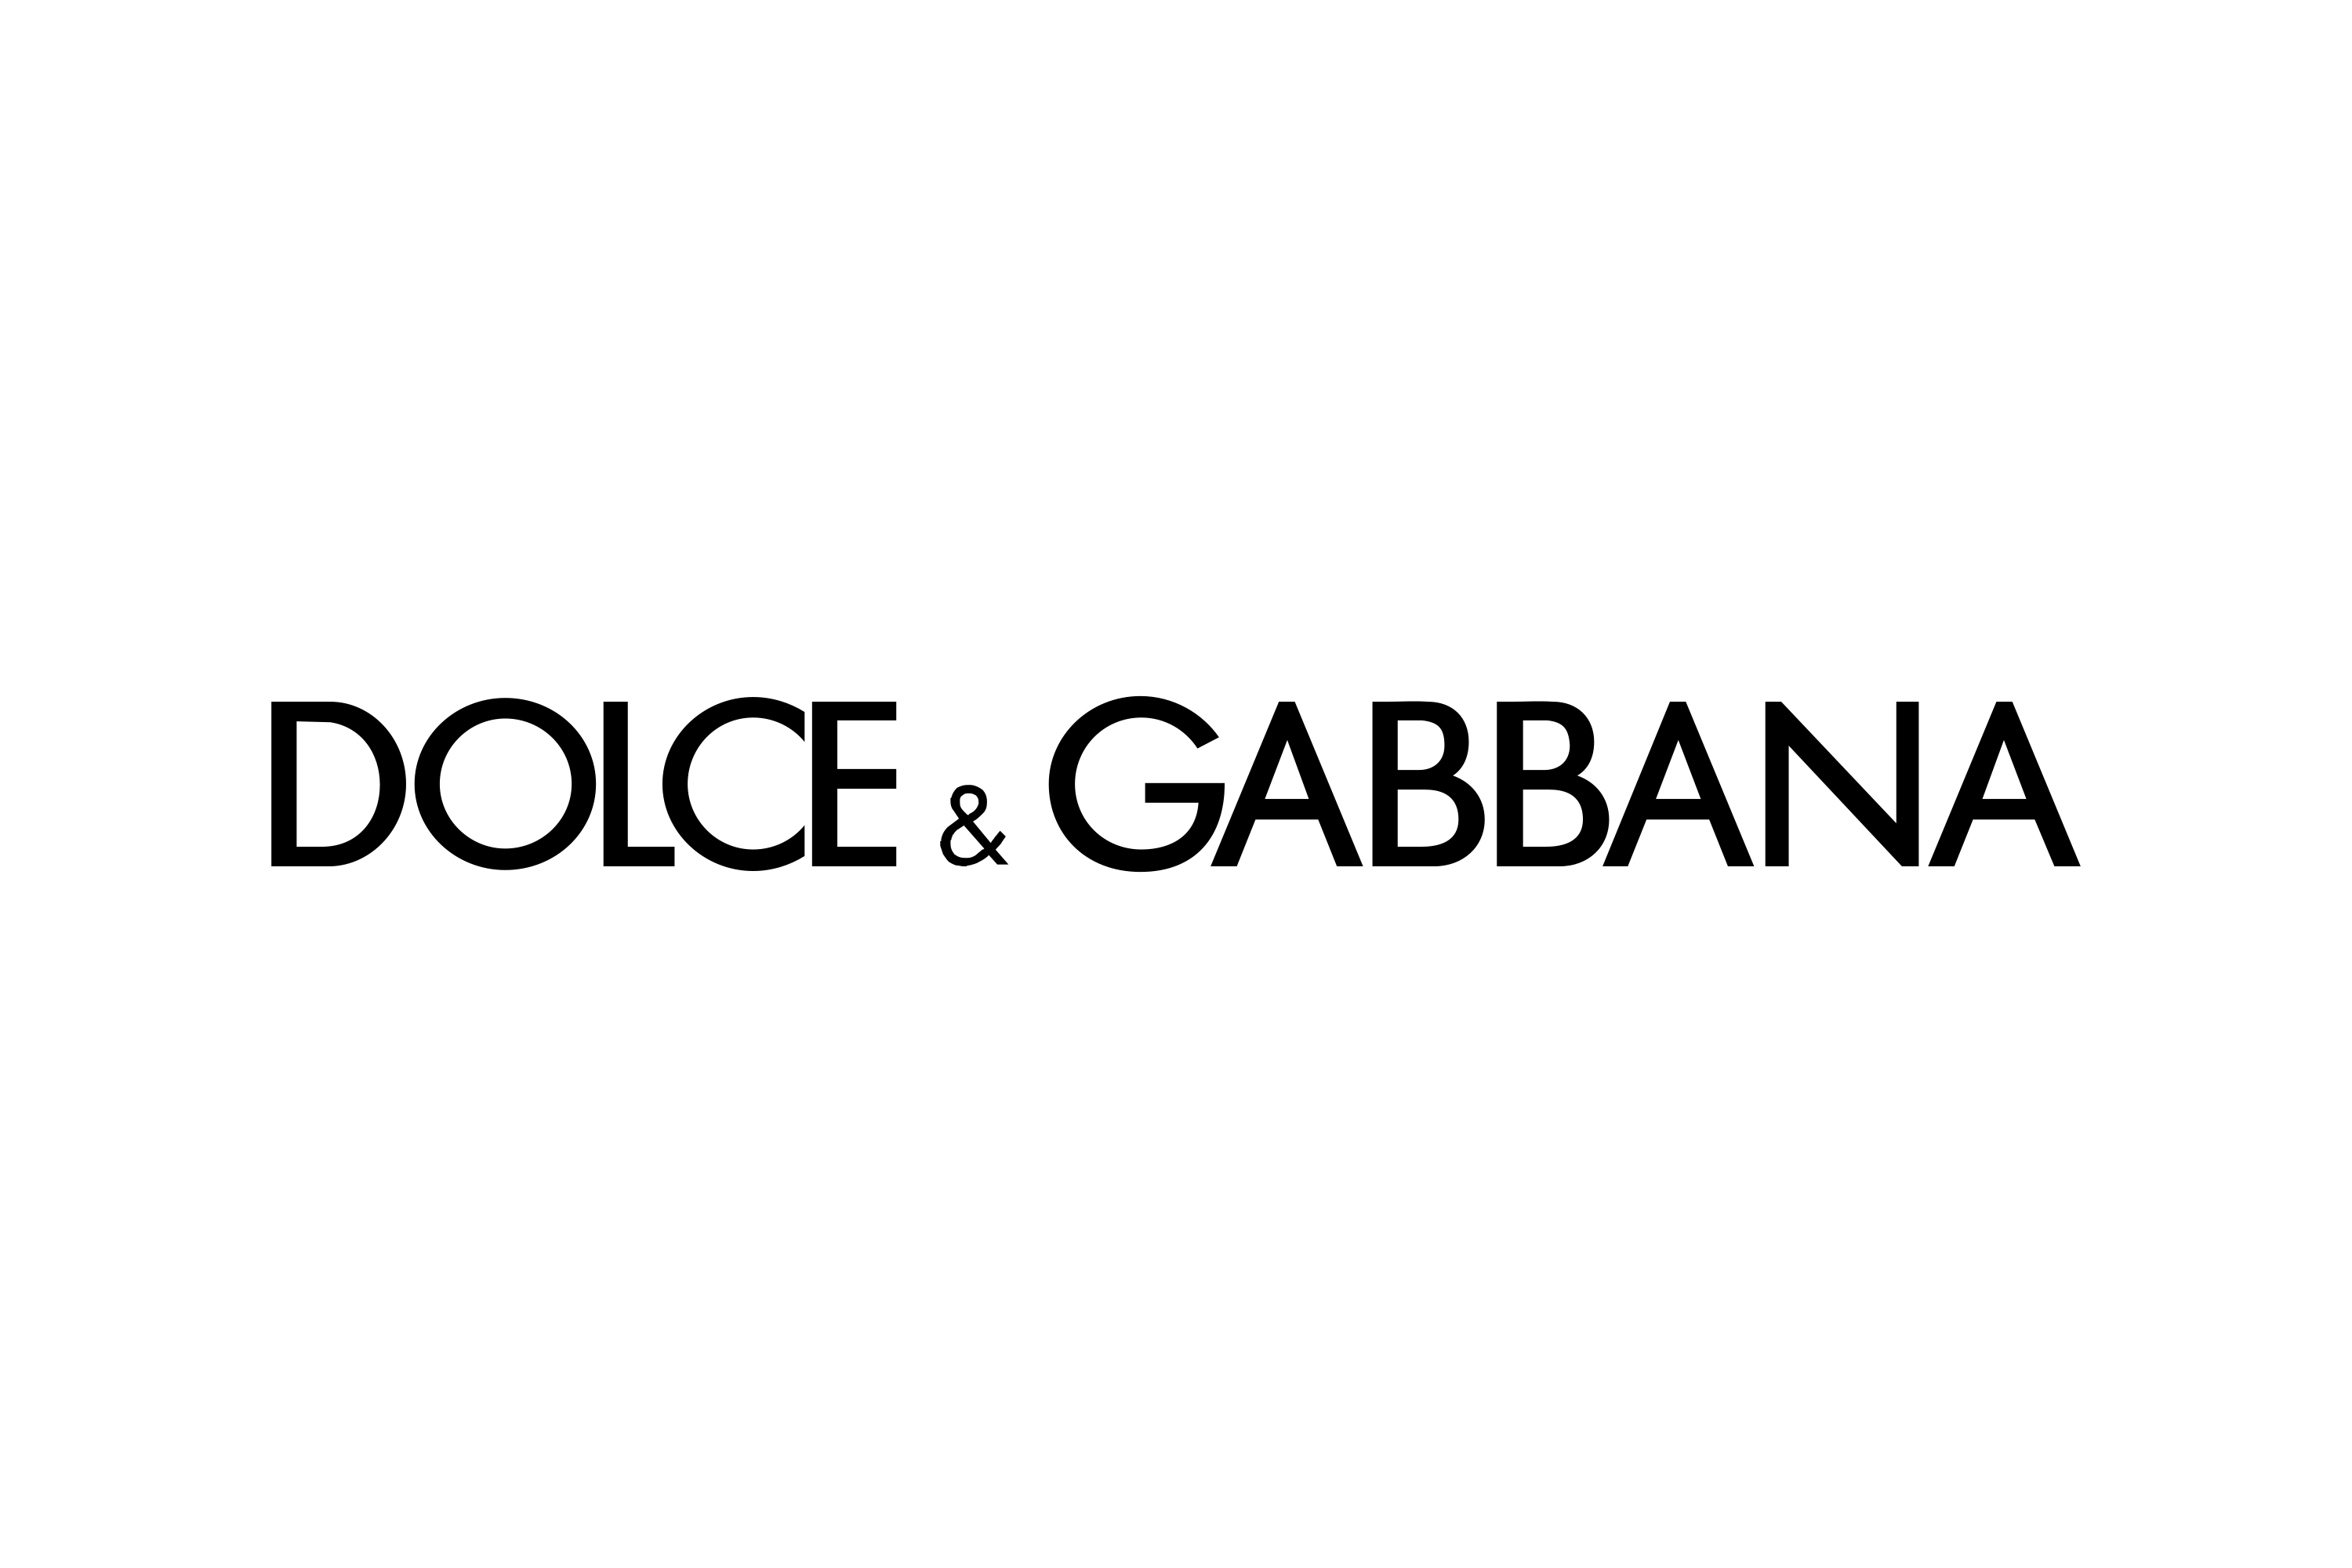 Dolce & Gabbana Logo - Free download logo in SVG or PNG format